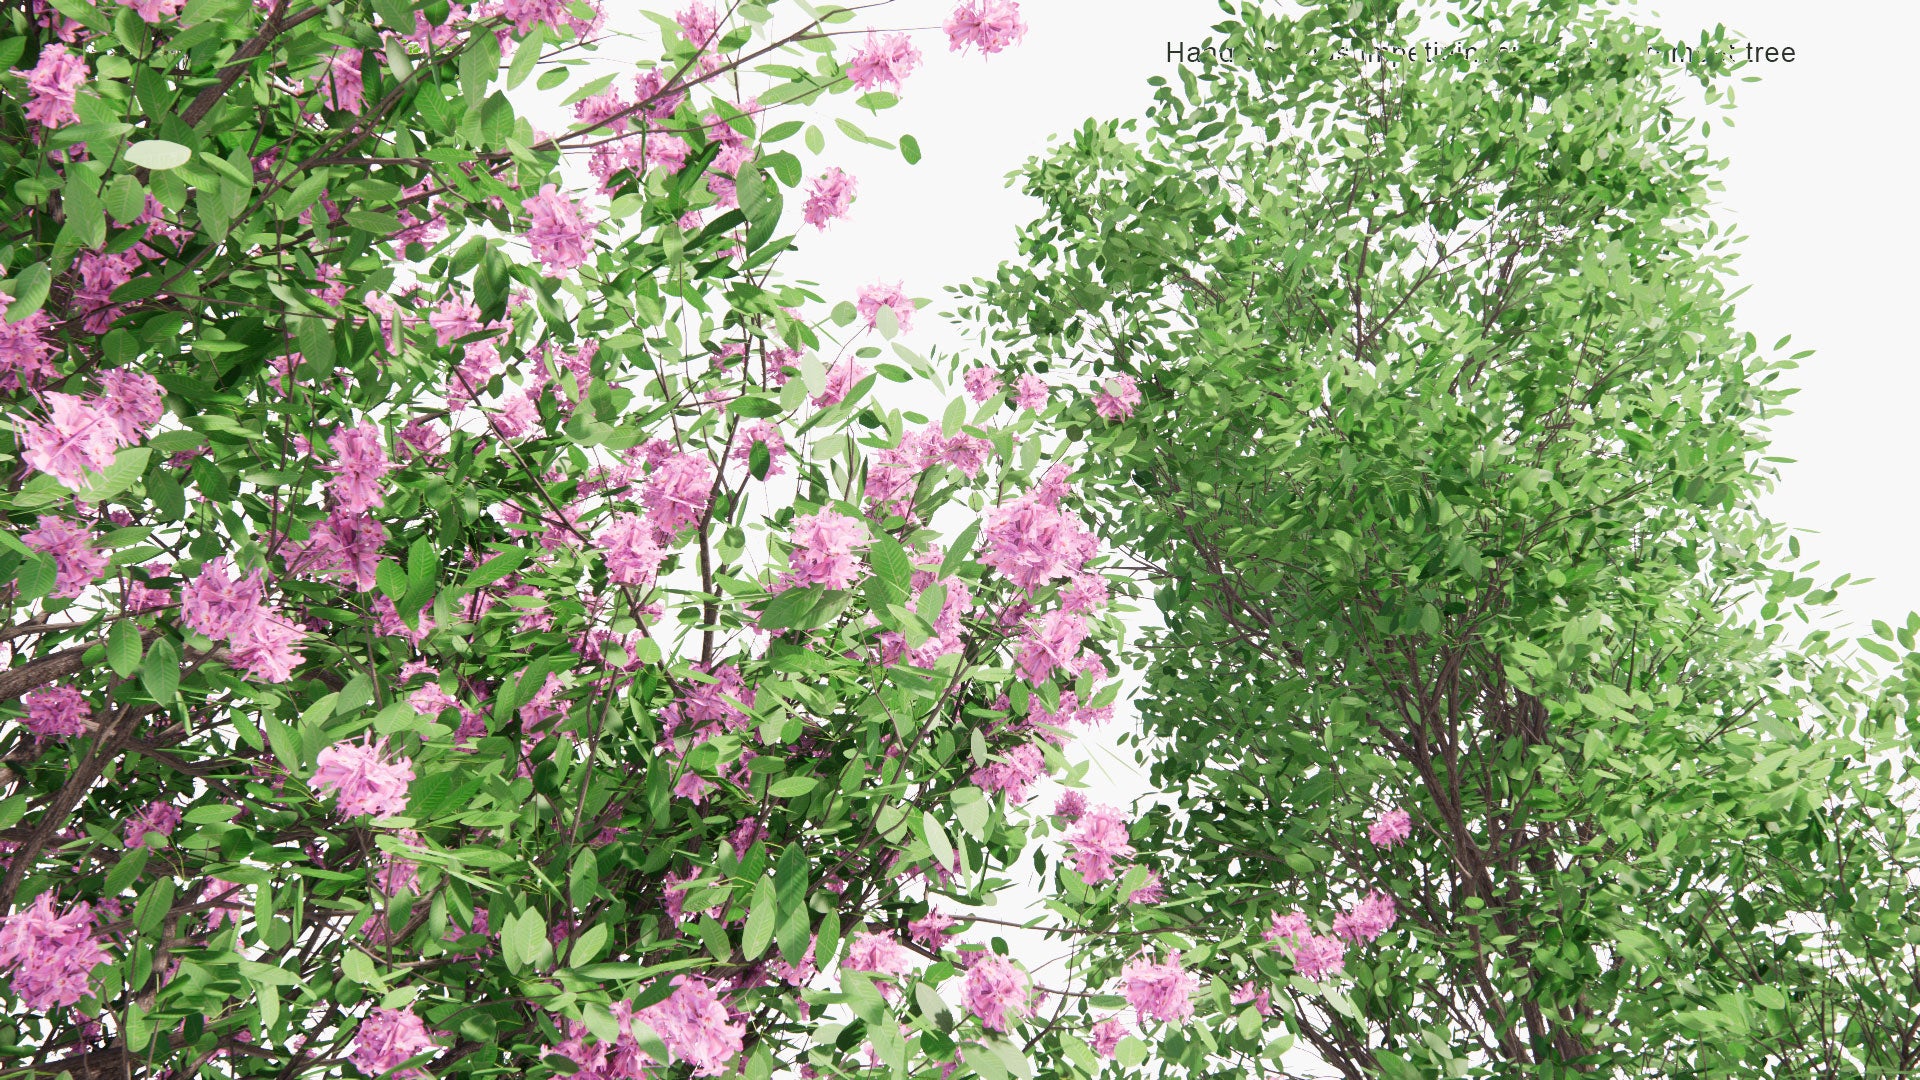 Low Poly Handroanthus Impetiginosus - Pink Ipê, Pink Lapacho, Pink Trumpet Tree (3D Model)